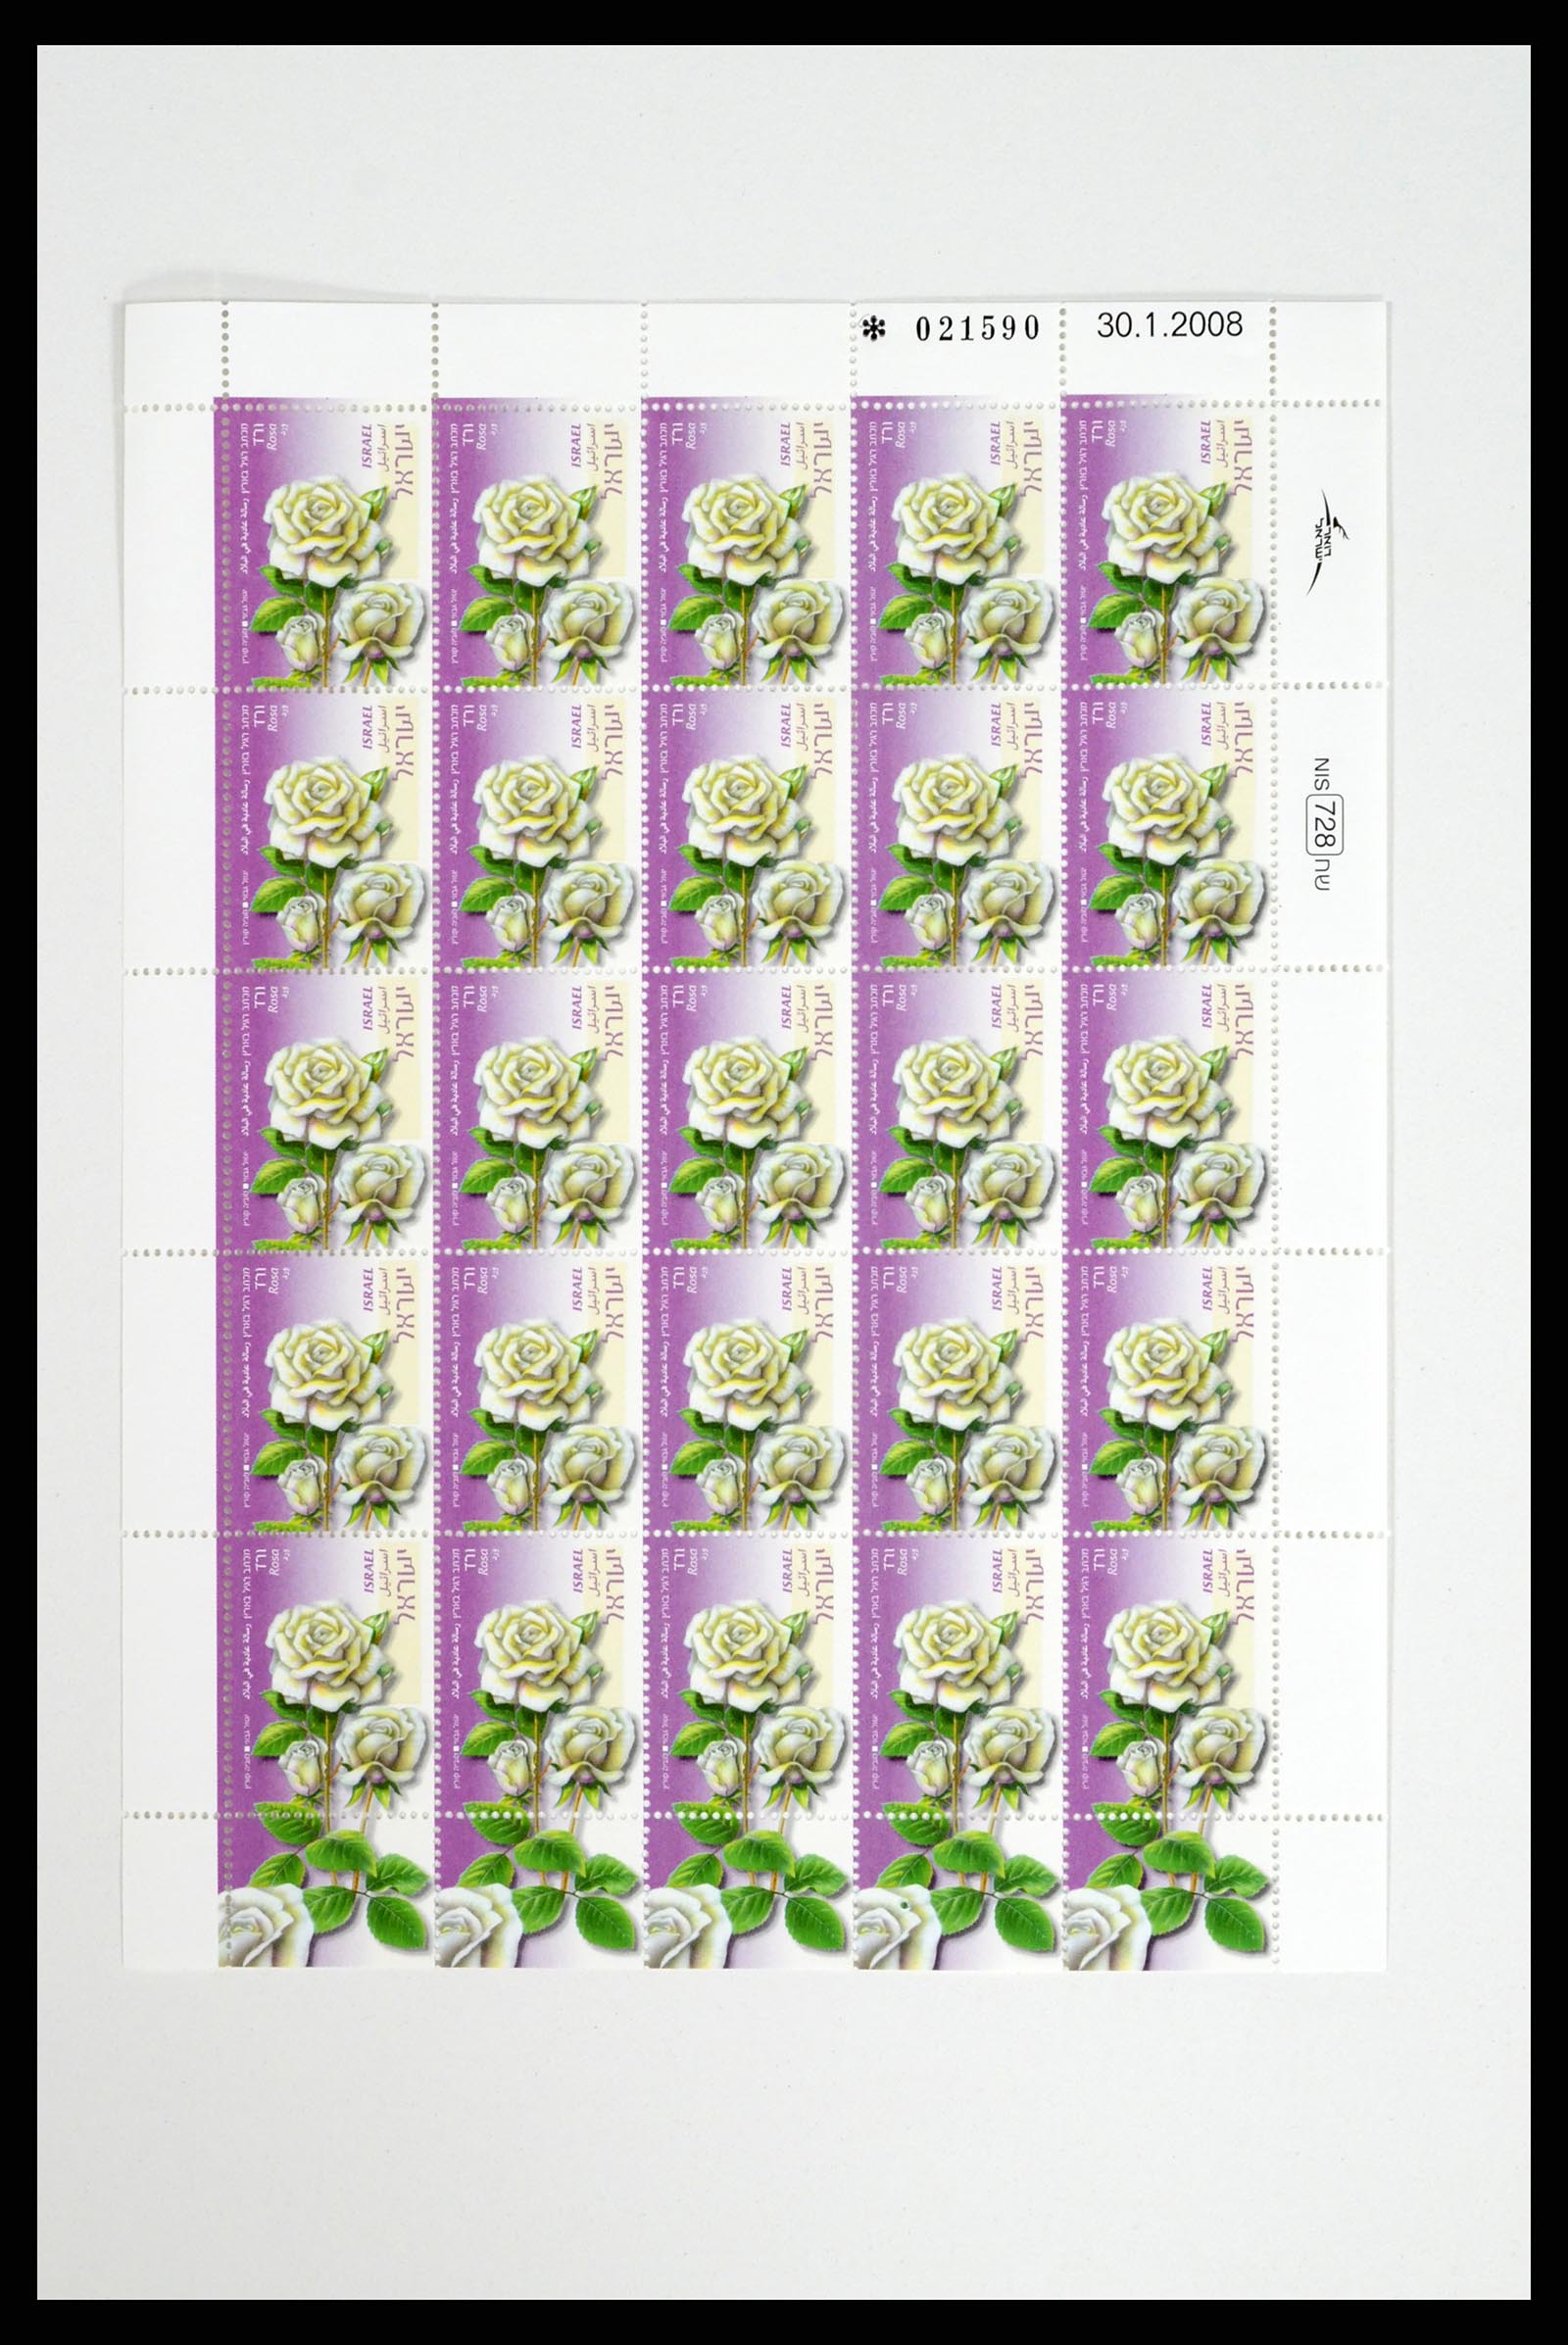 37779 088 - Stamp collection 37779 Israel sheetlets 1986-2009.